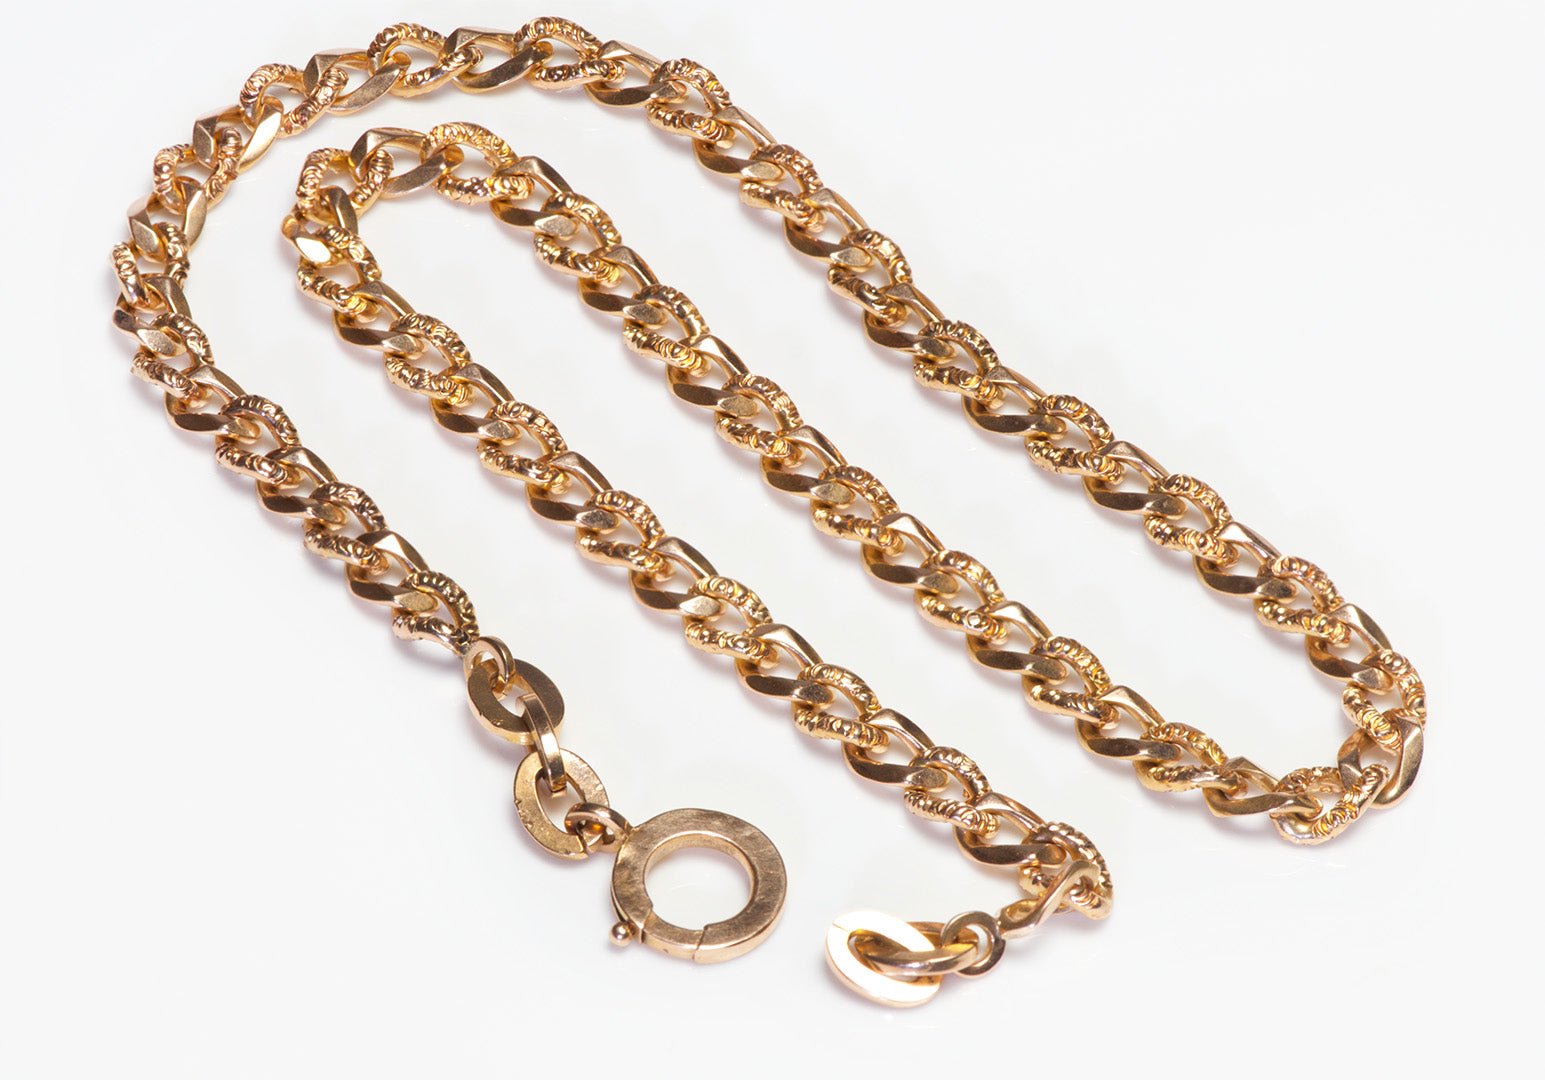 Antique 18K Gold Fancy Link Watch Chain